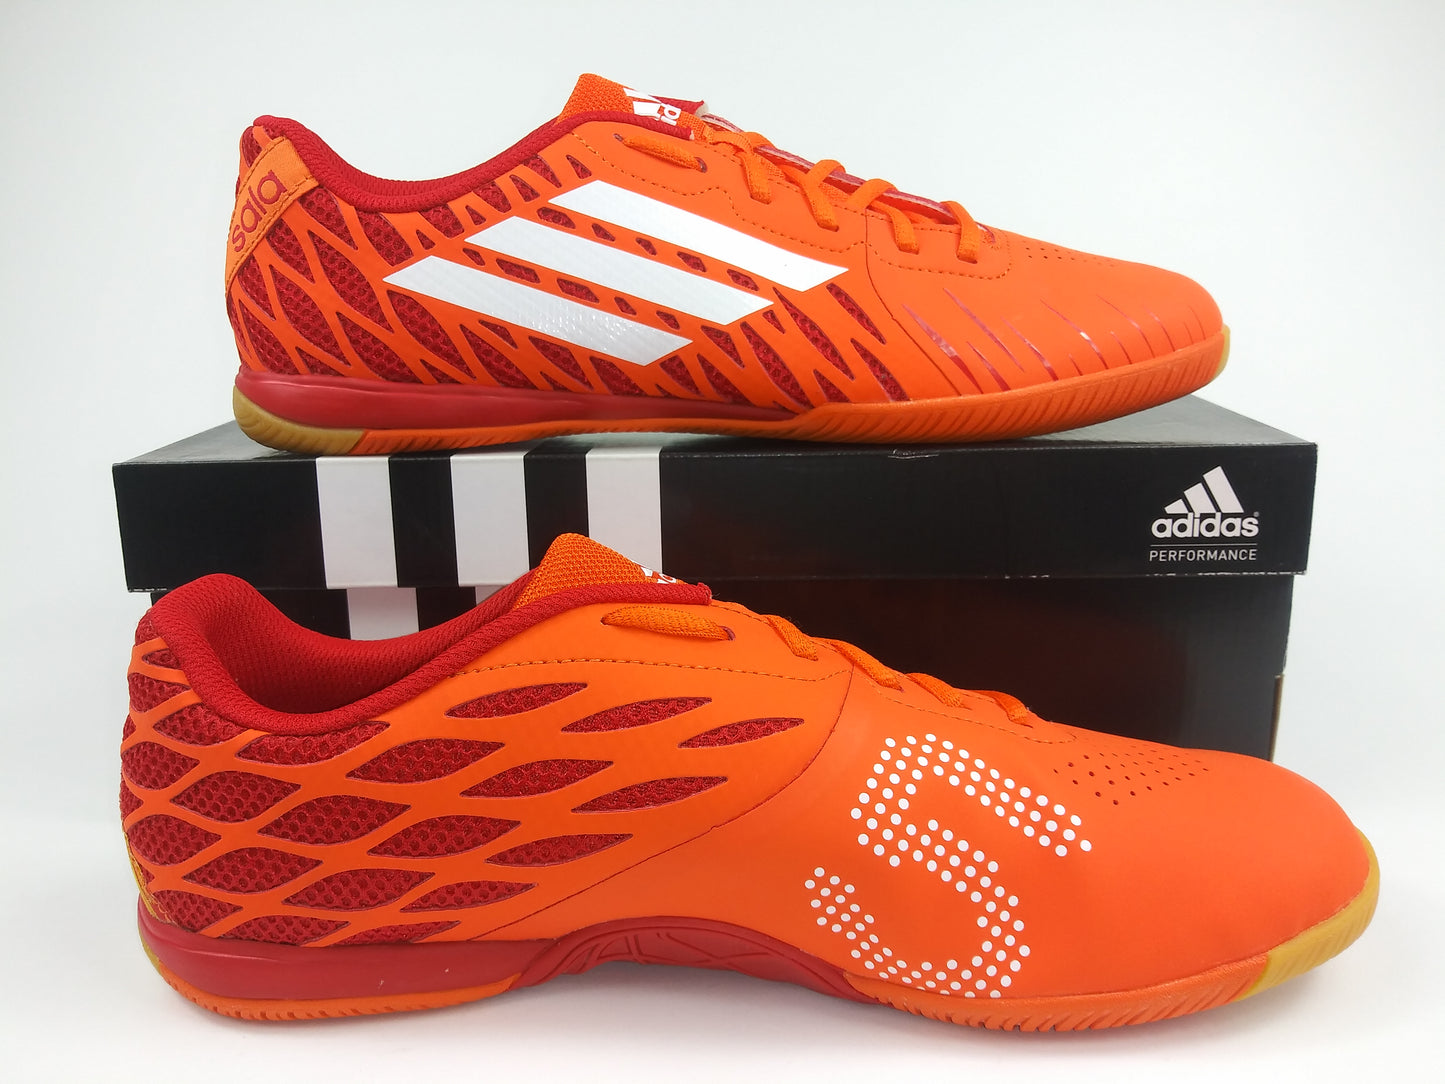 Adidas freefootball SpeedTrick Orange Red